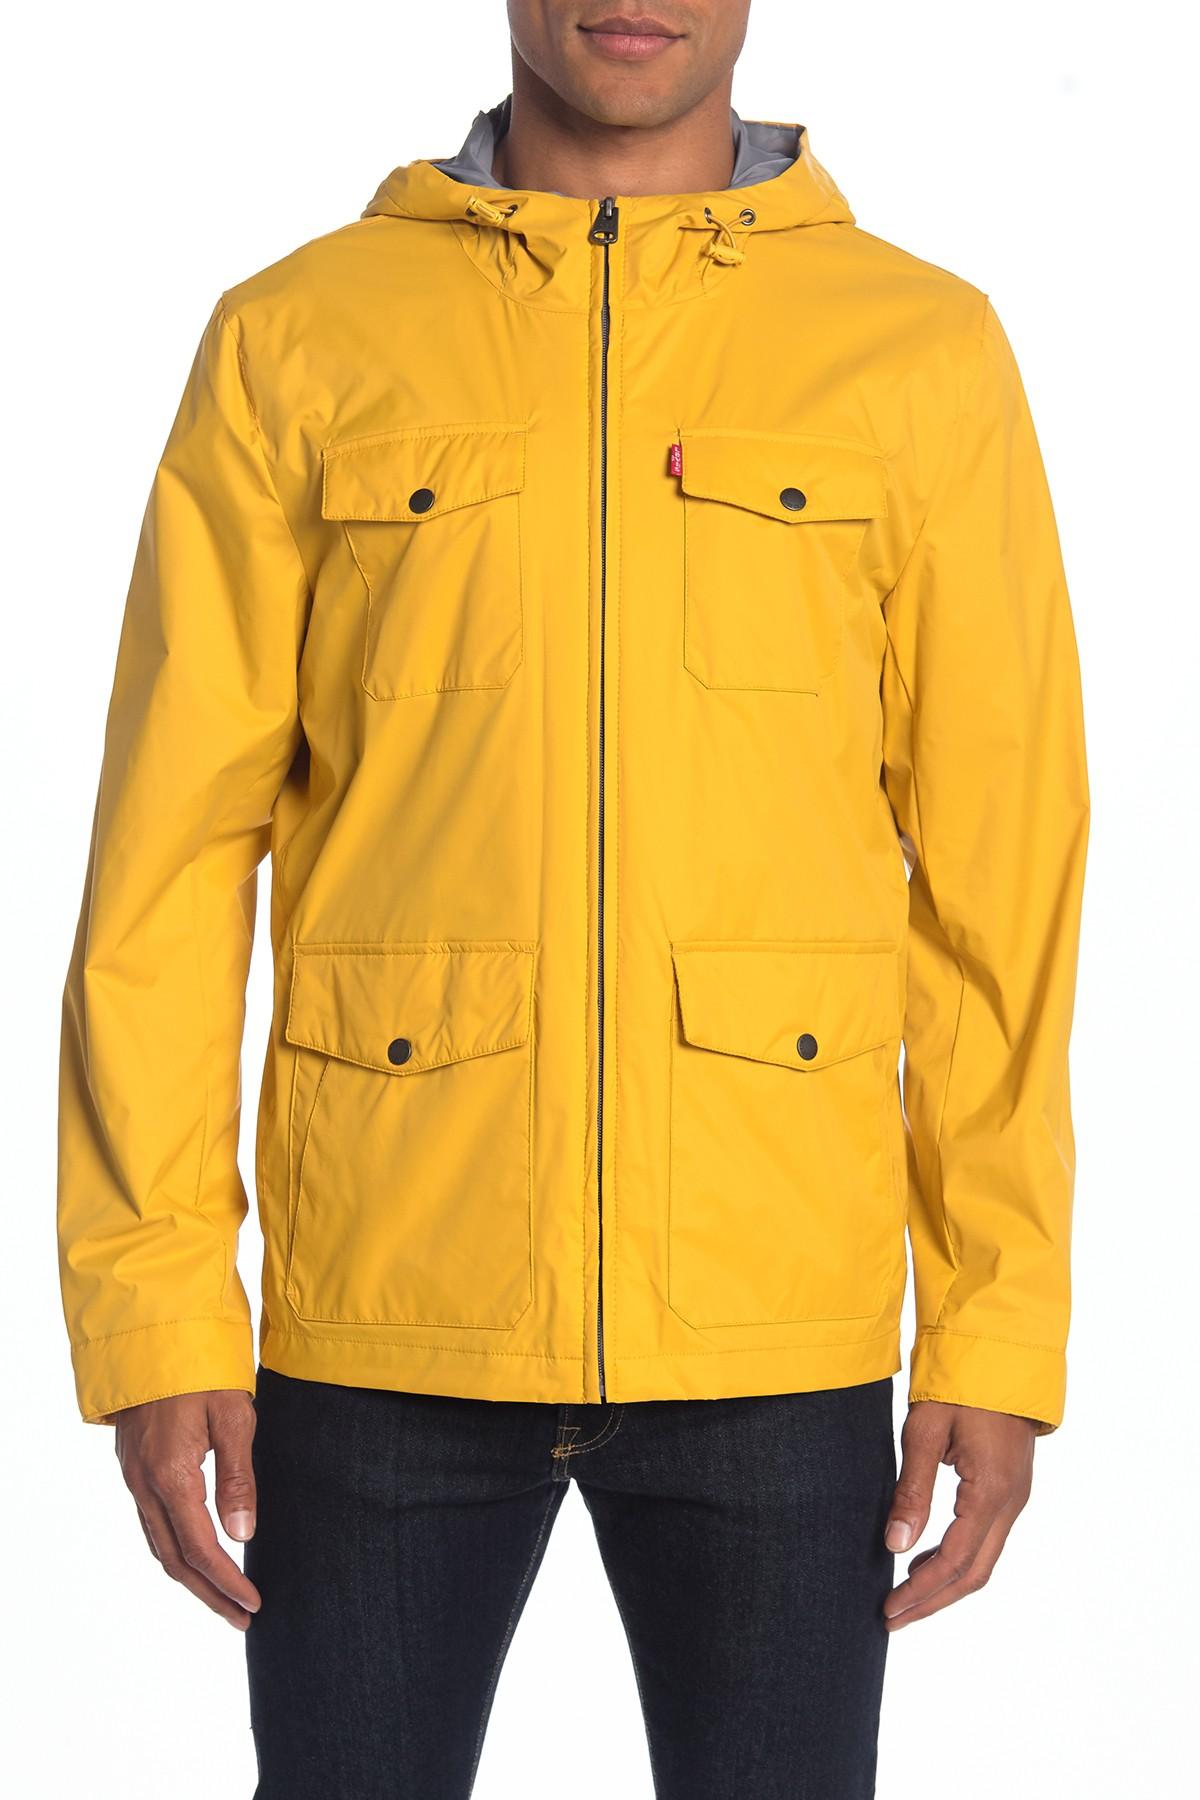 Levi's Synthetic Nylon 4 Pocket Rain Jacket in Yellow for Men - Lyst